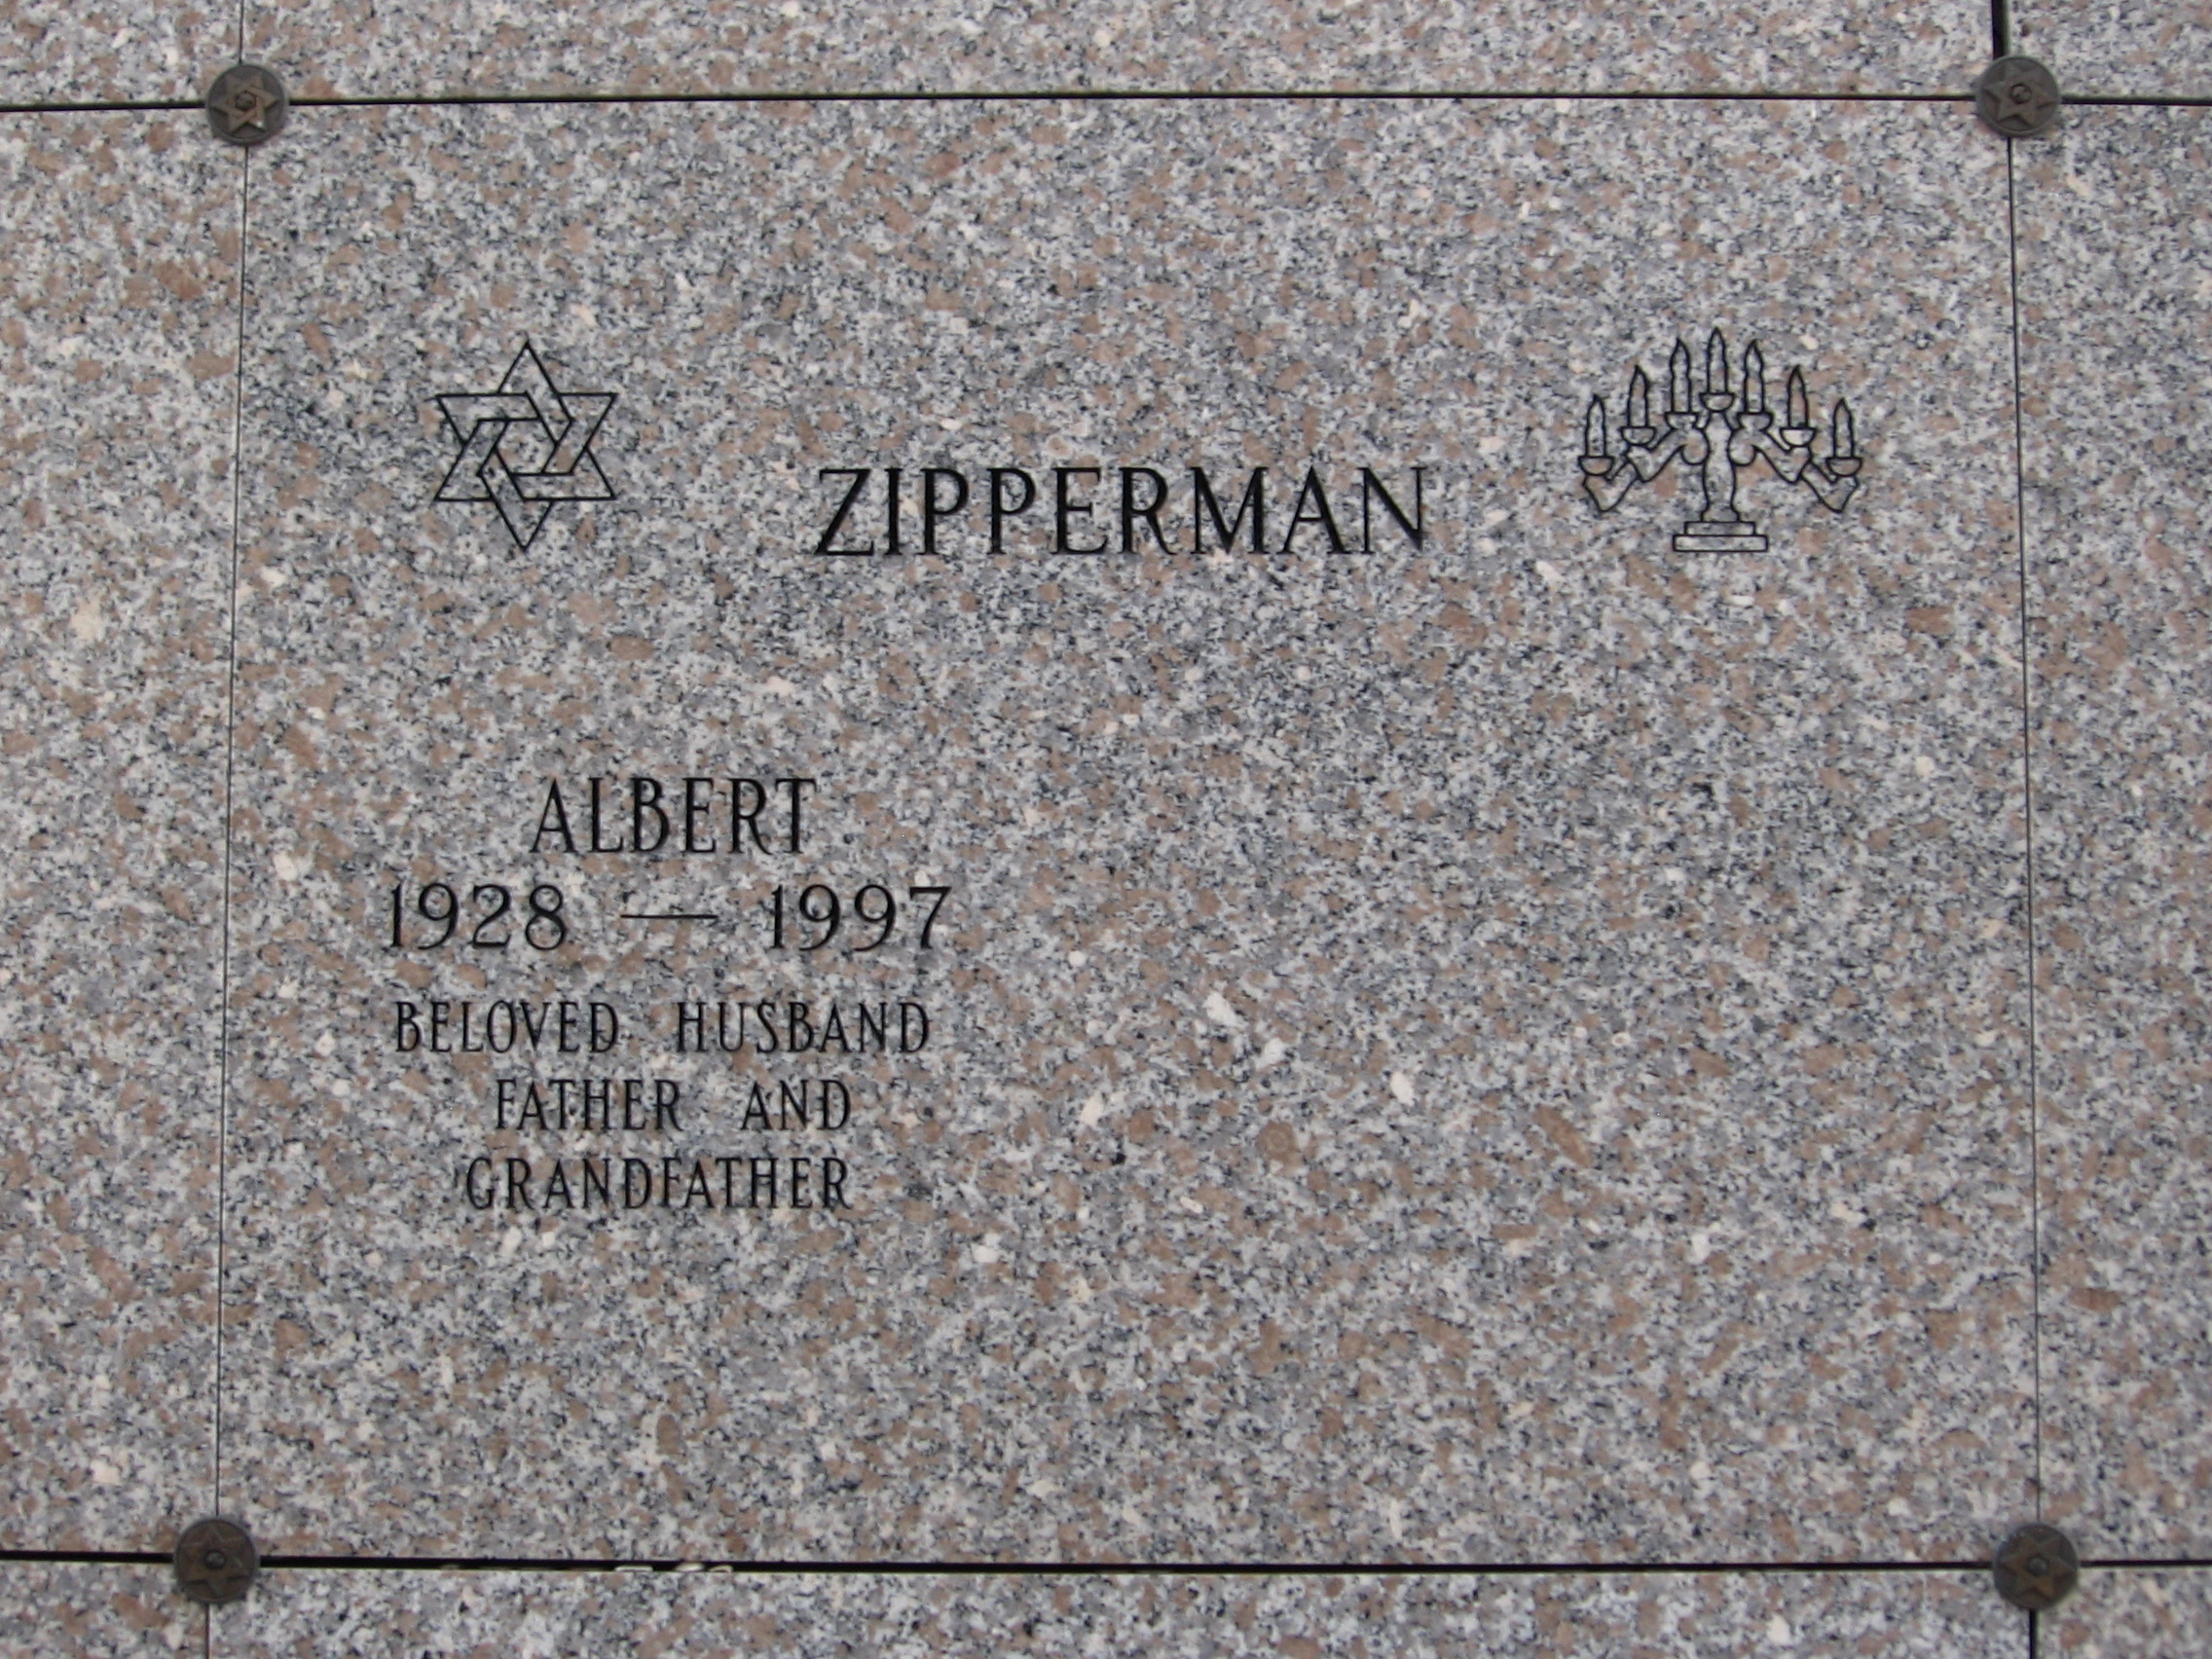 Albert Zipperman